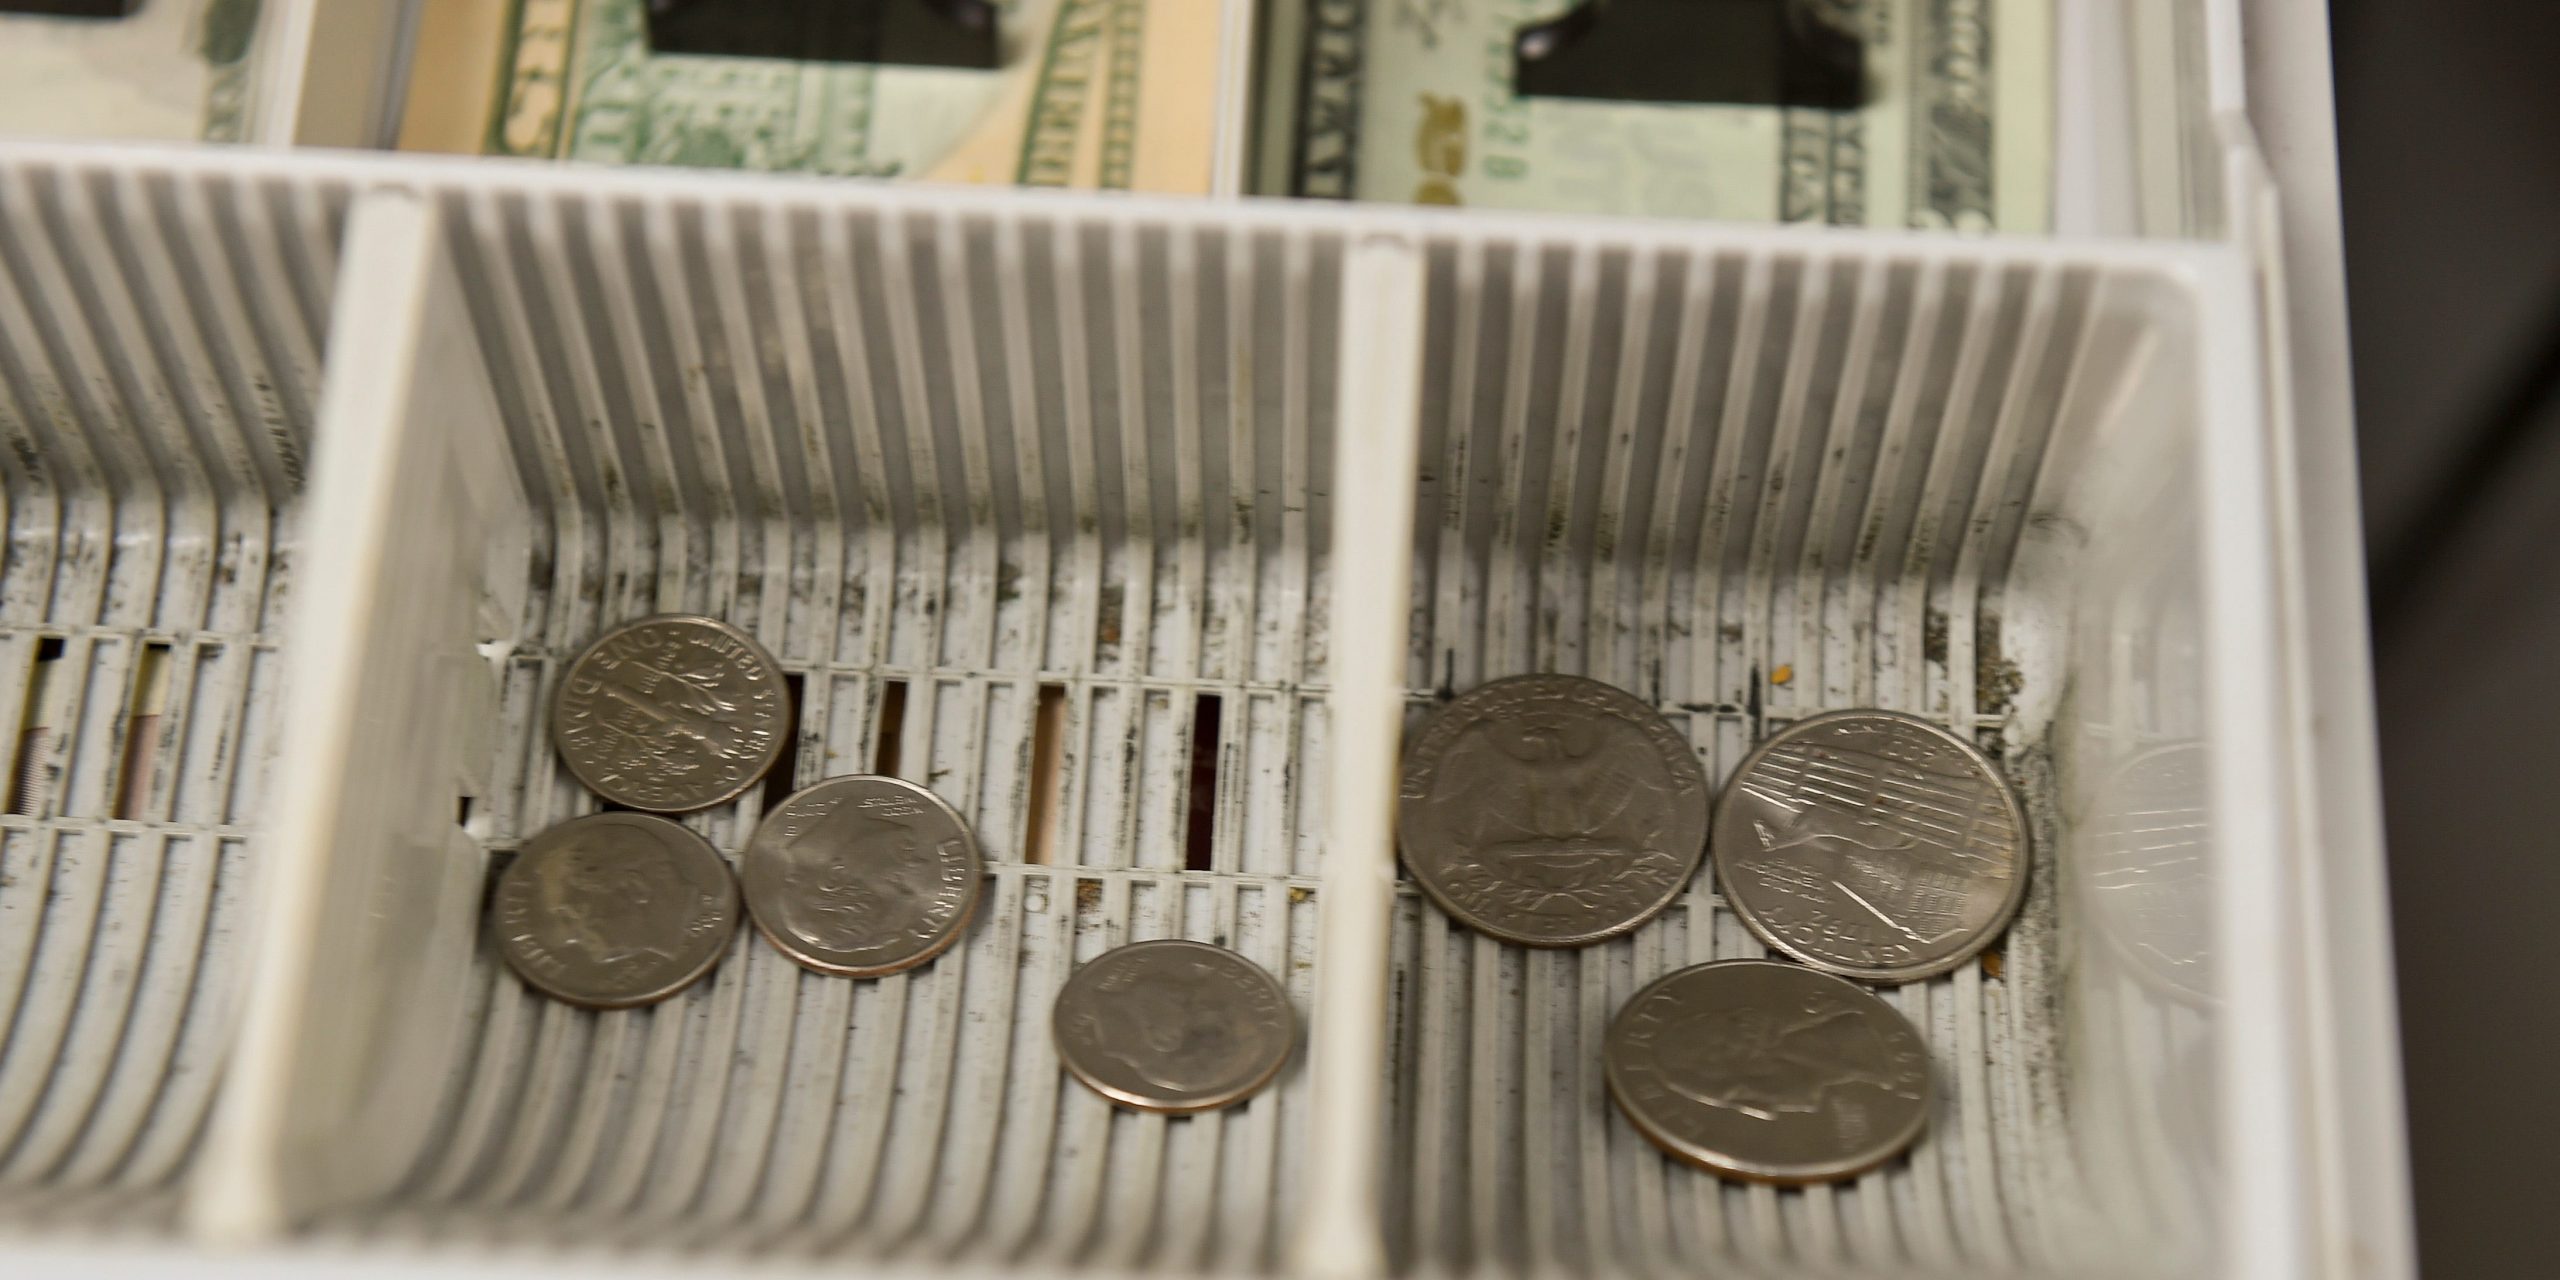 change drawer coin shortage